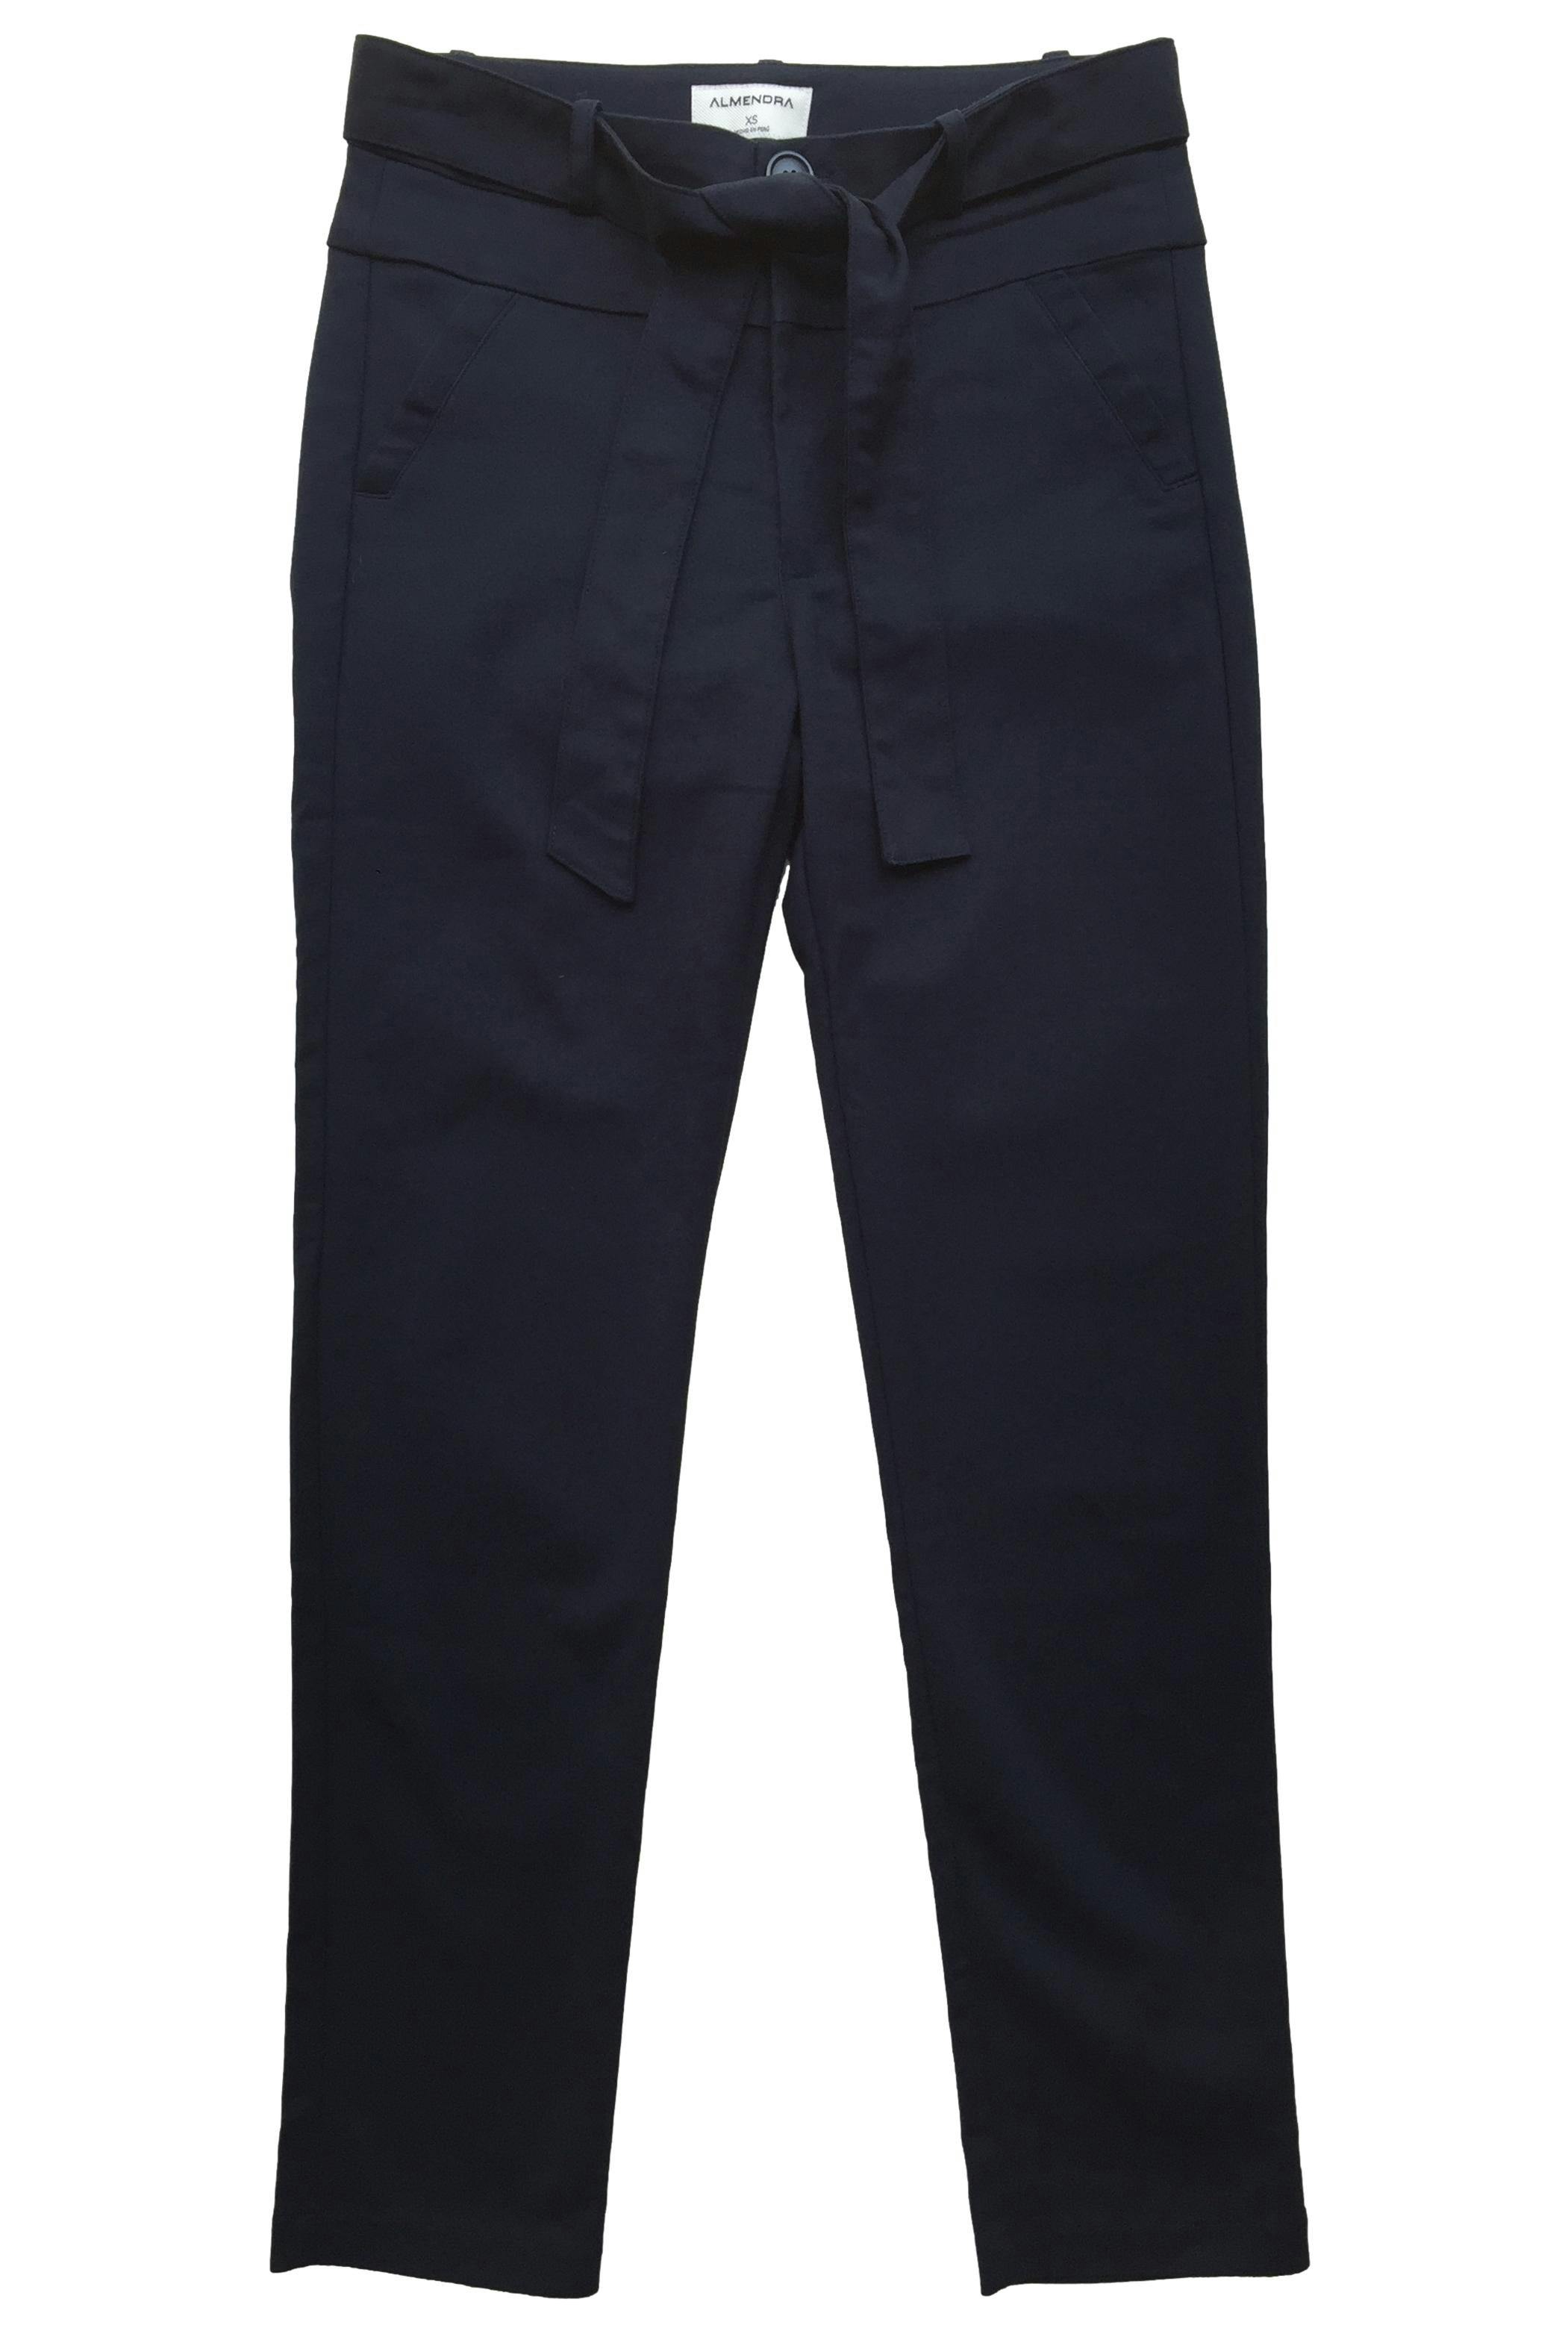 Pantalón slim azul marino con cinturón y falsos bolsillos. Cintura 80cm, Tiro 27cm, Largo 95cm.